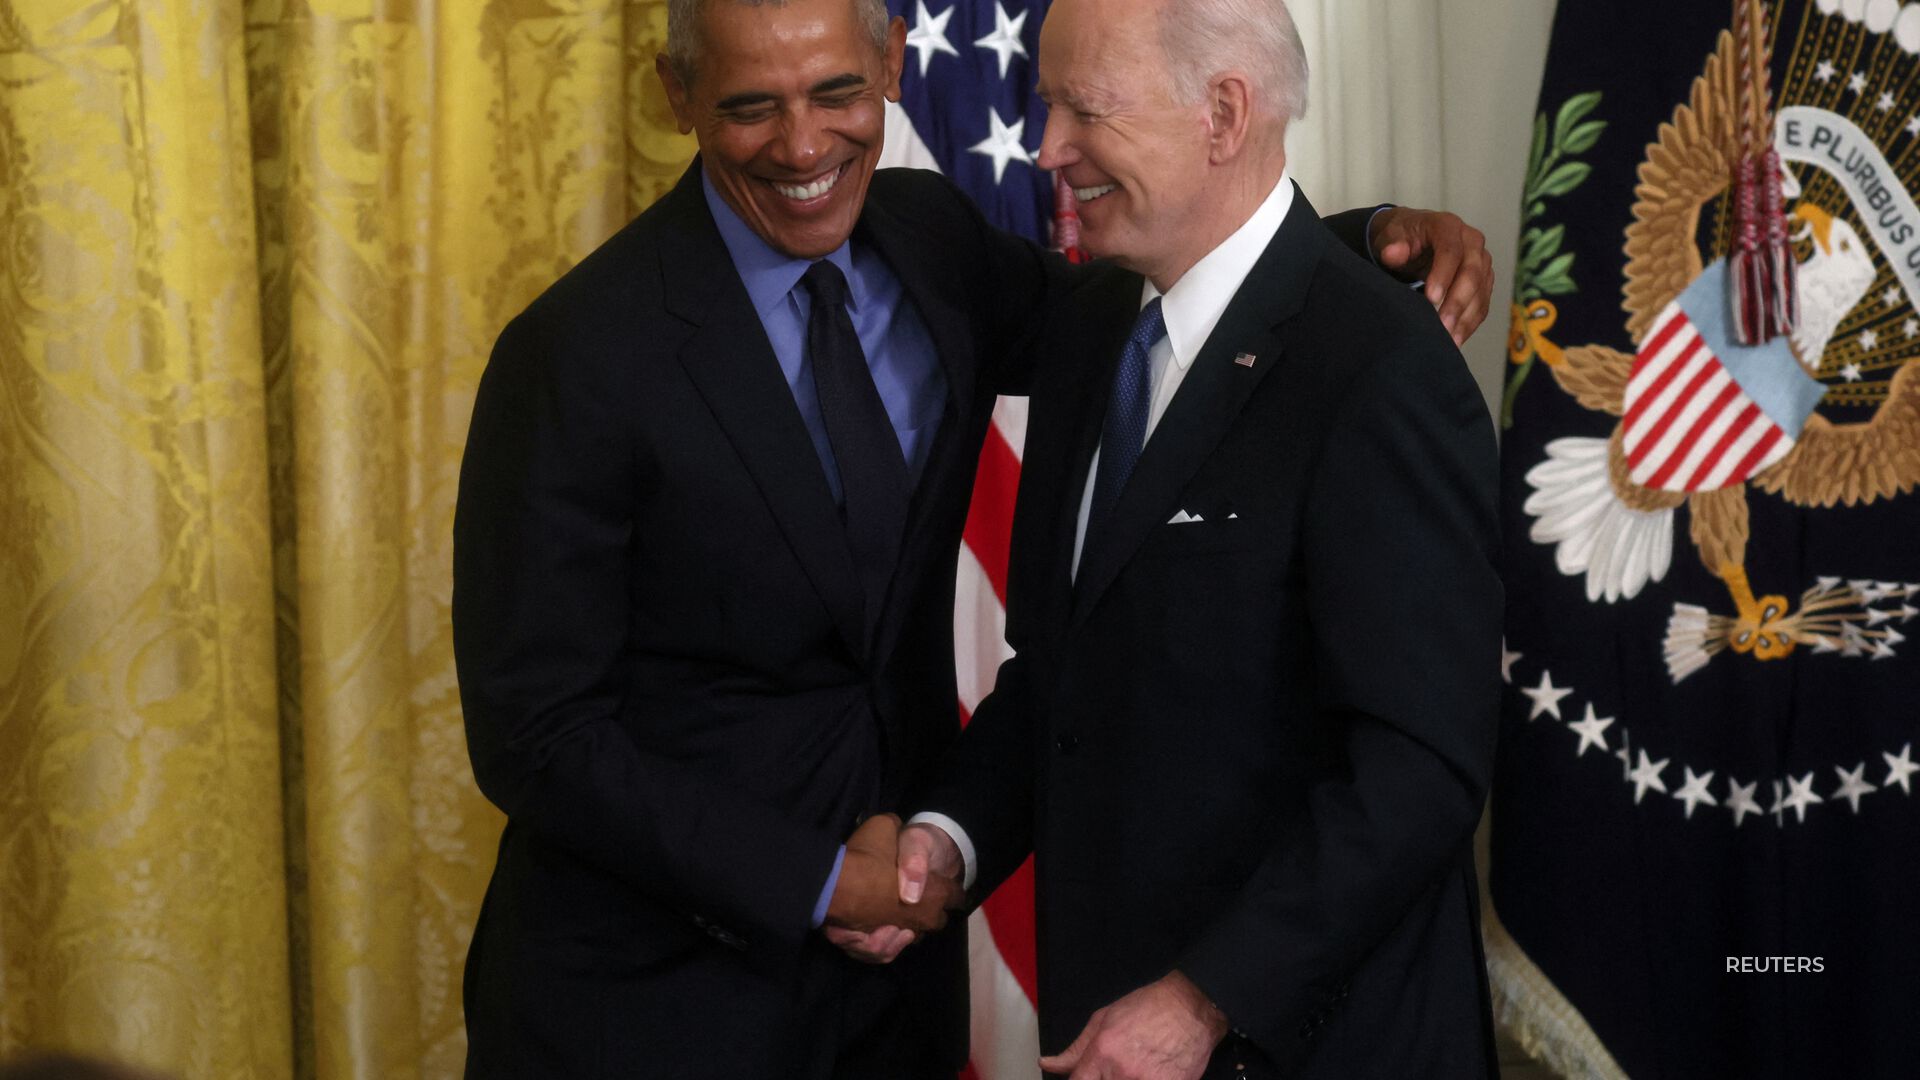 Biden extended the student loan moratorium as Obama made his White House return.